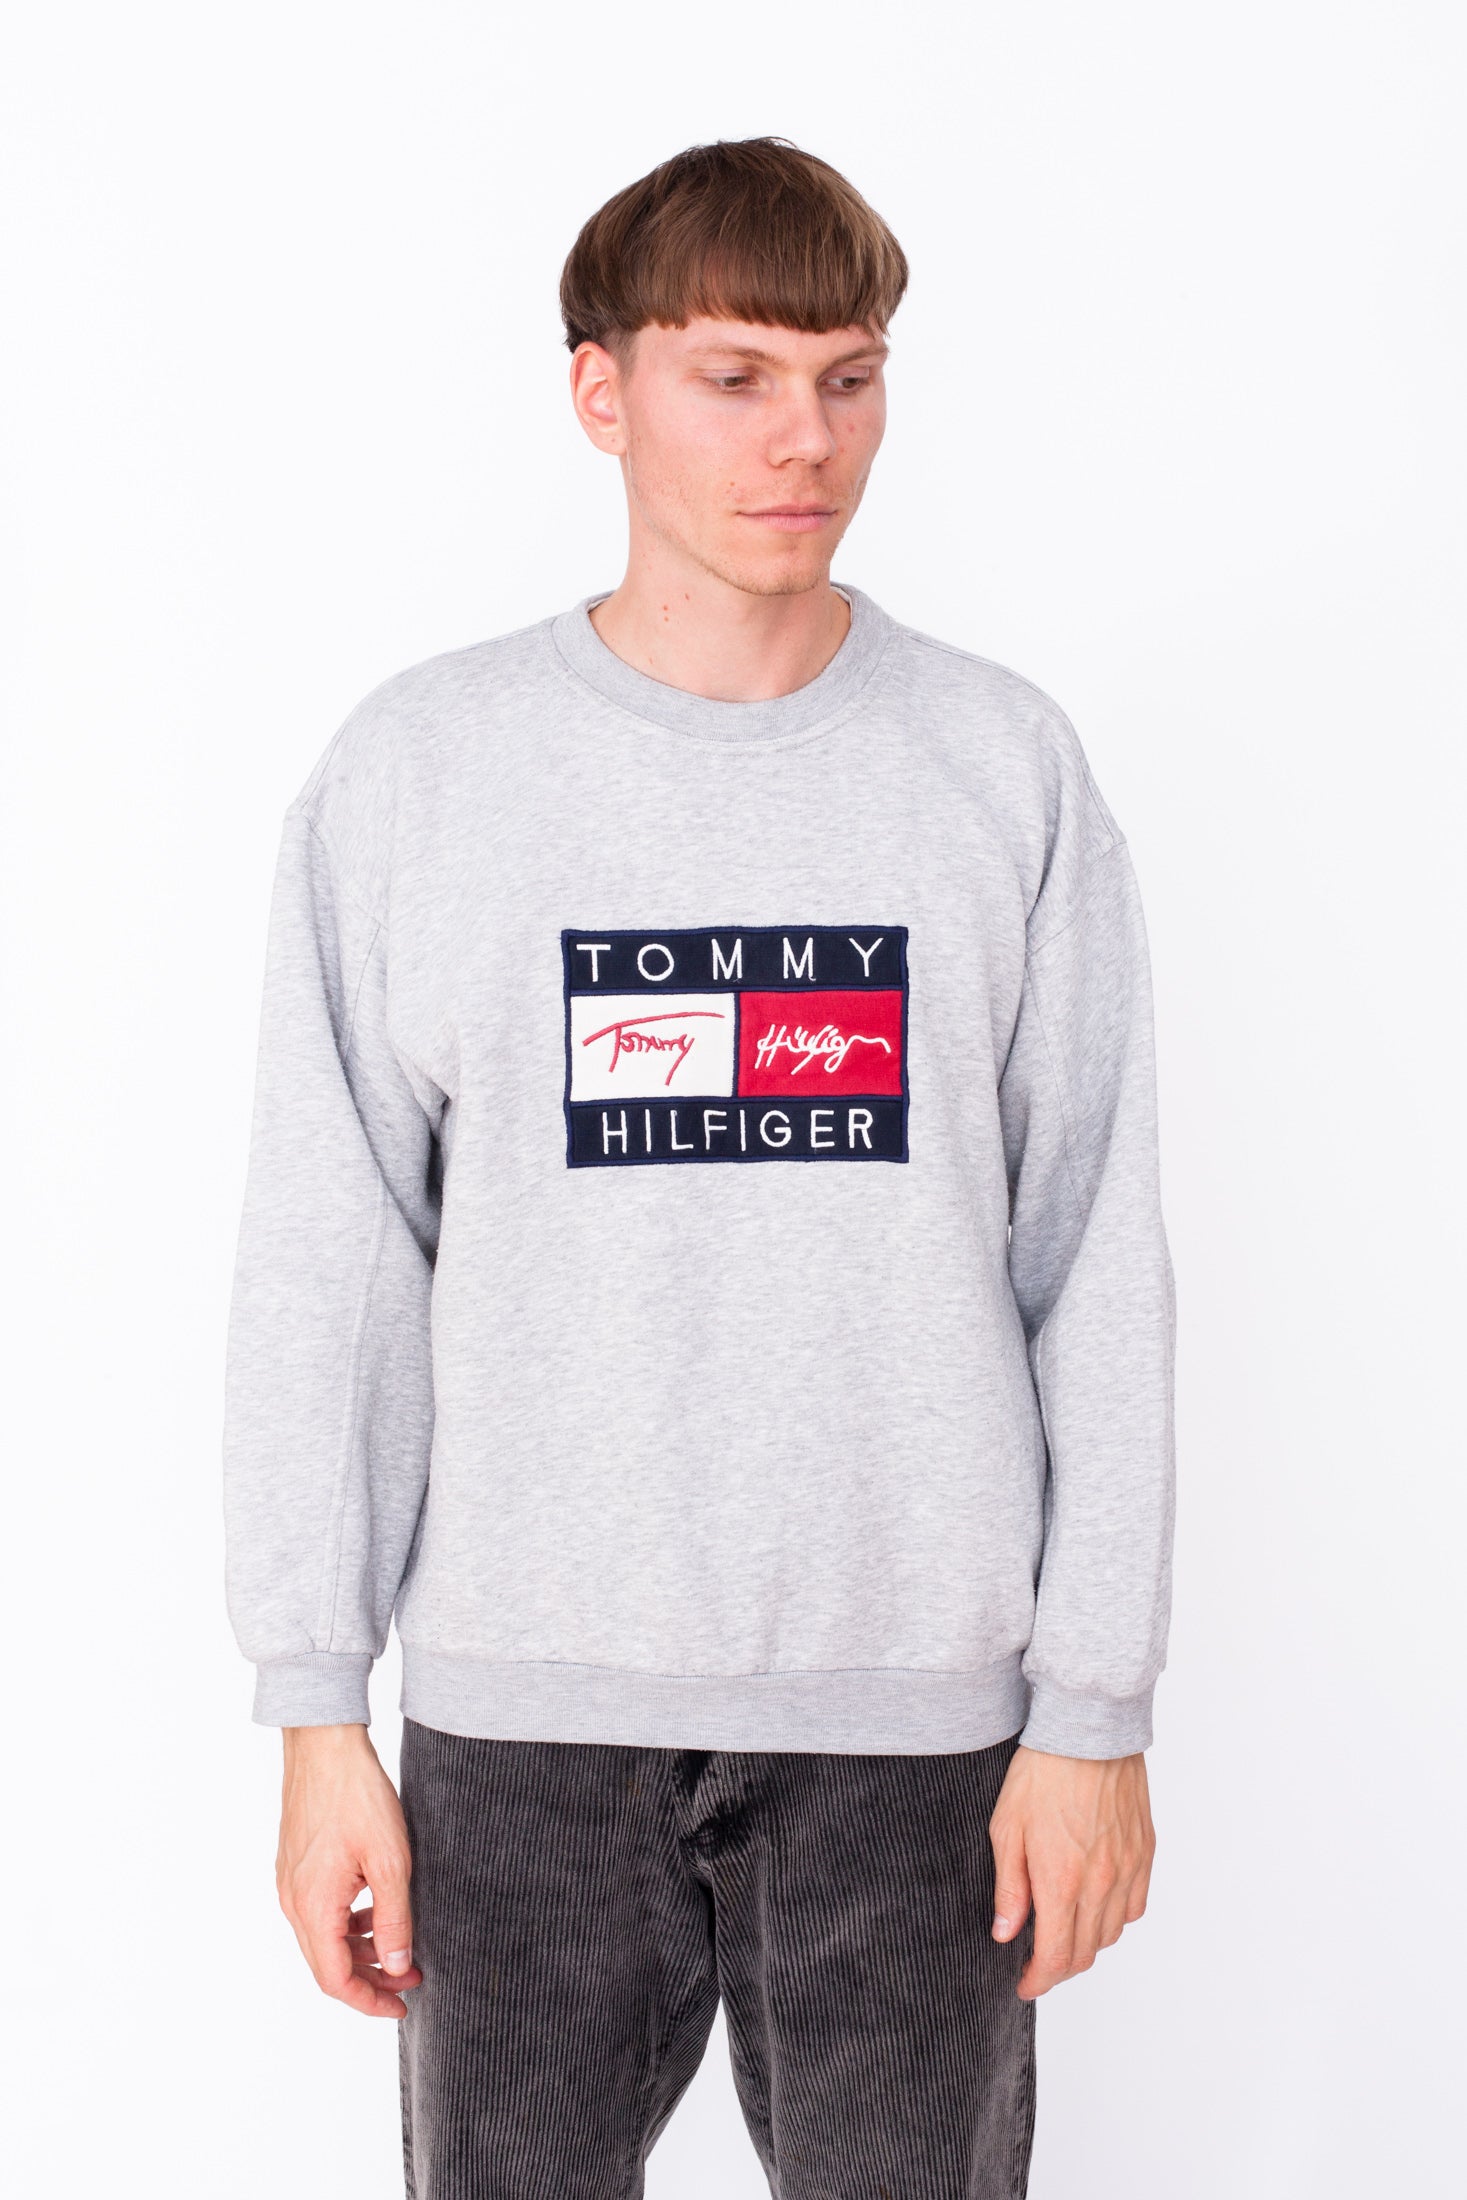 Not Too RARE Vintage Tommy Hilfiger – Sweet 90s Big Sweatshirt Logo